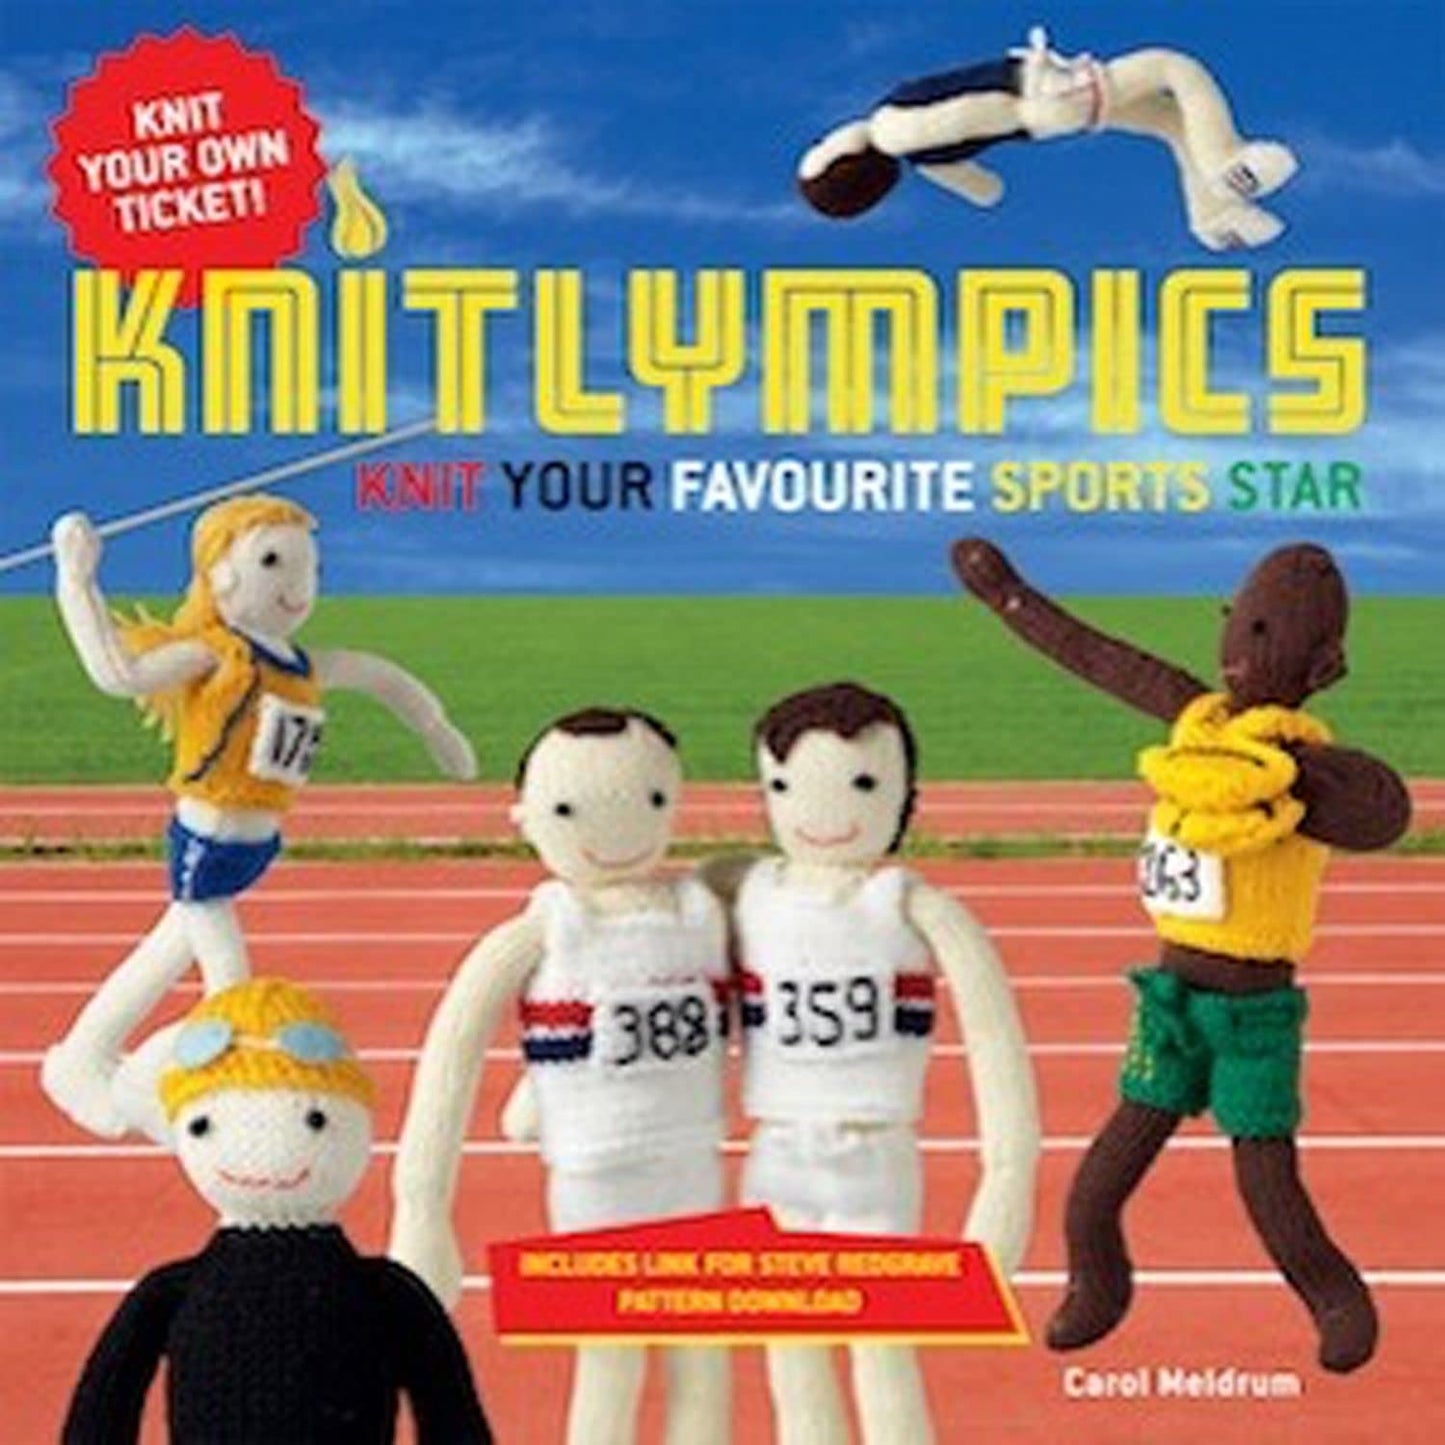 Knitlympics: Knit Your Favourite Sports Star, by Carol Meldrum